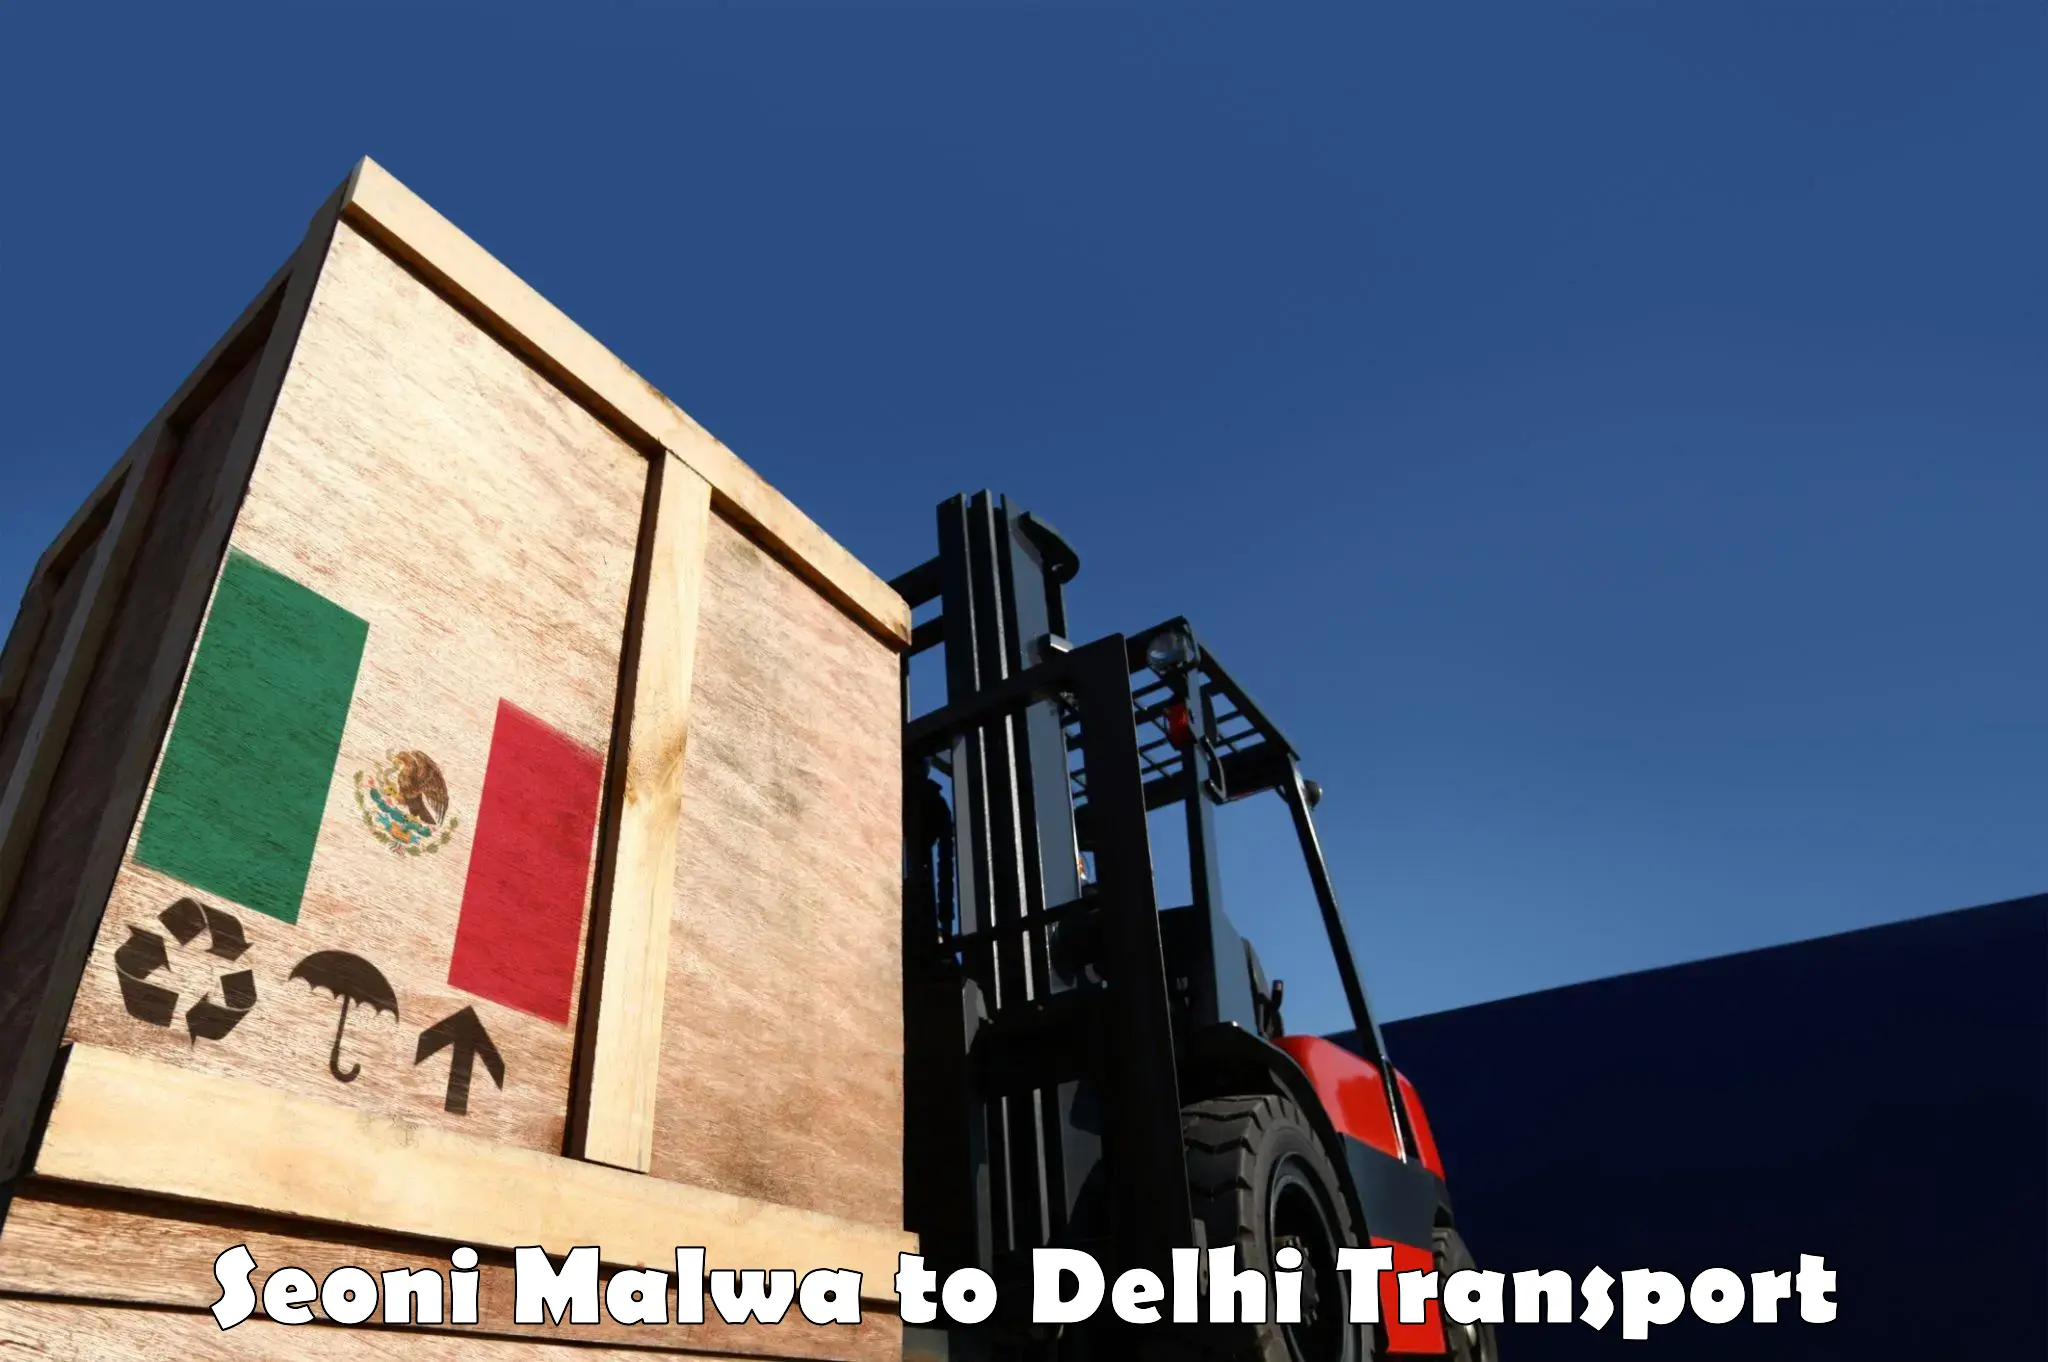 Cycle transportation service Seoni Malwa to Delhi